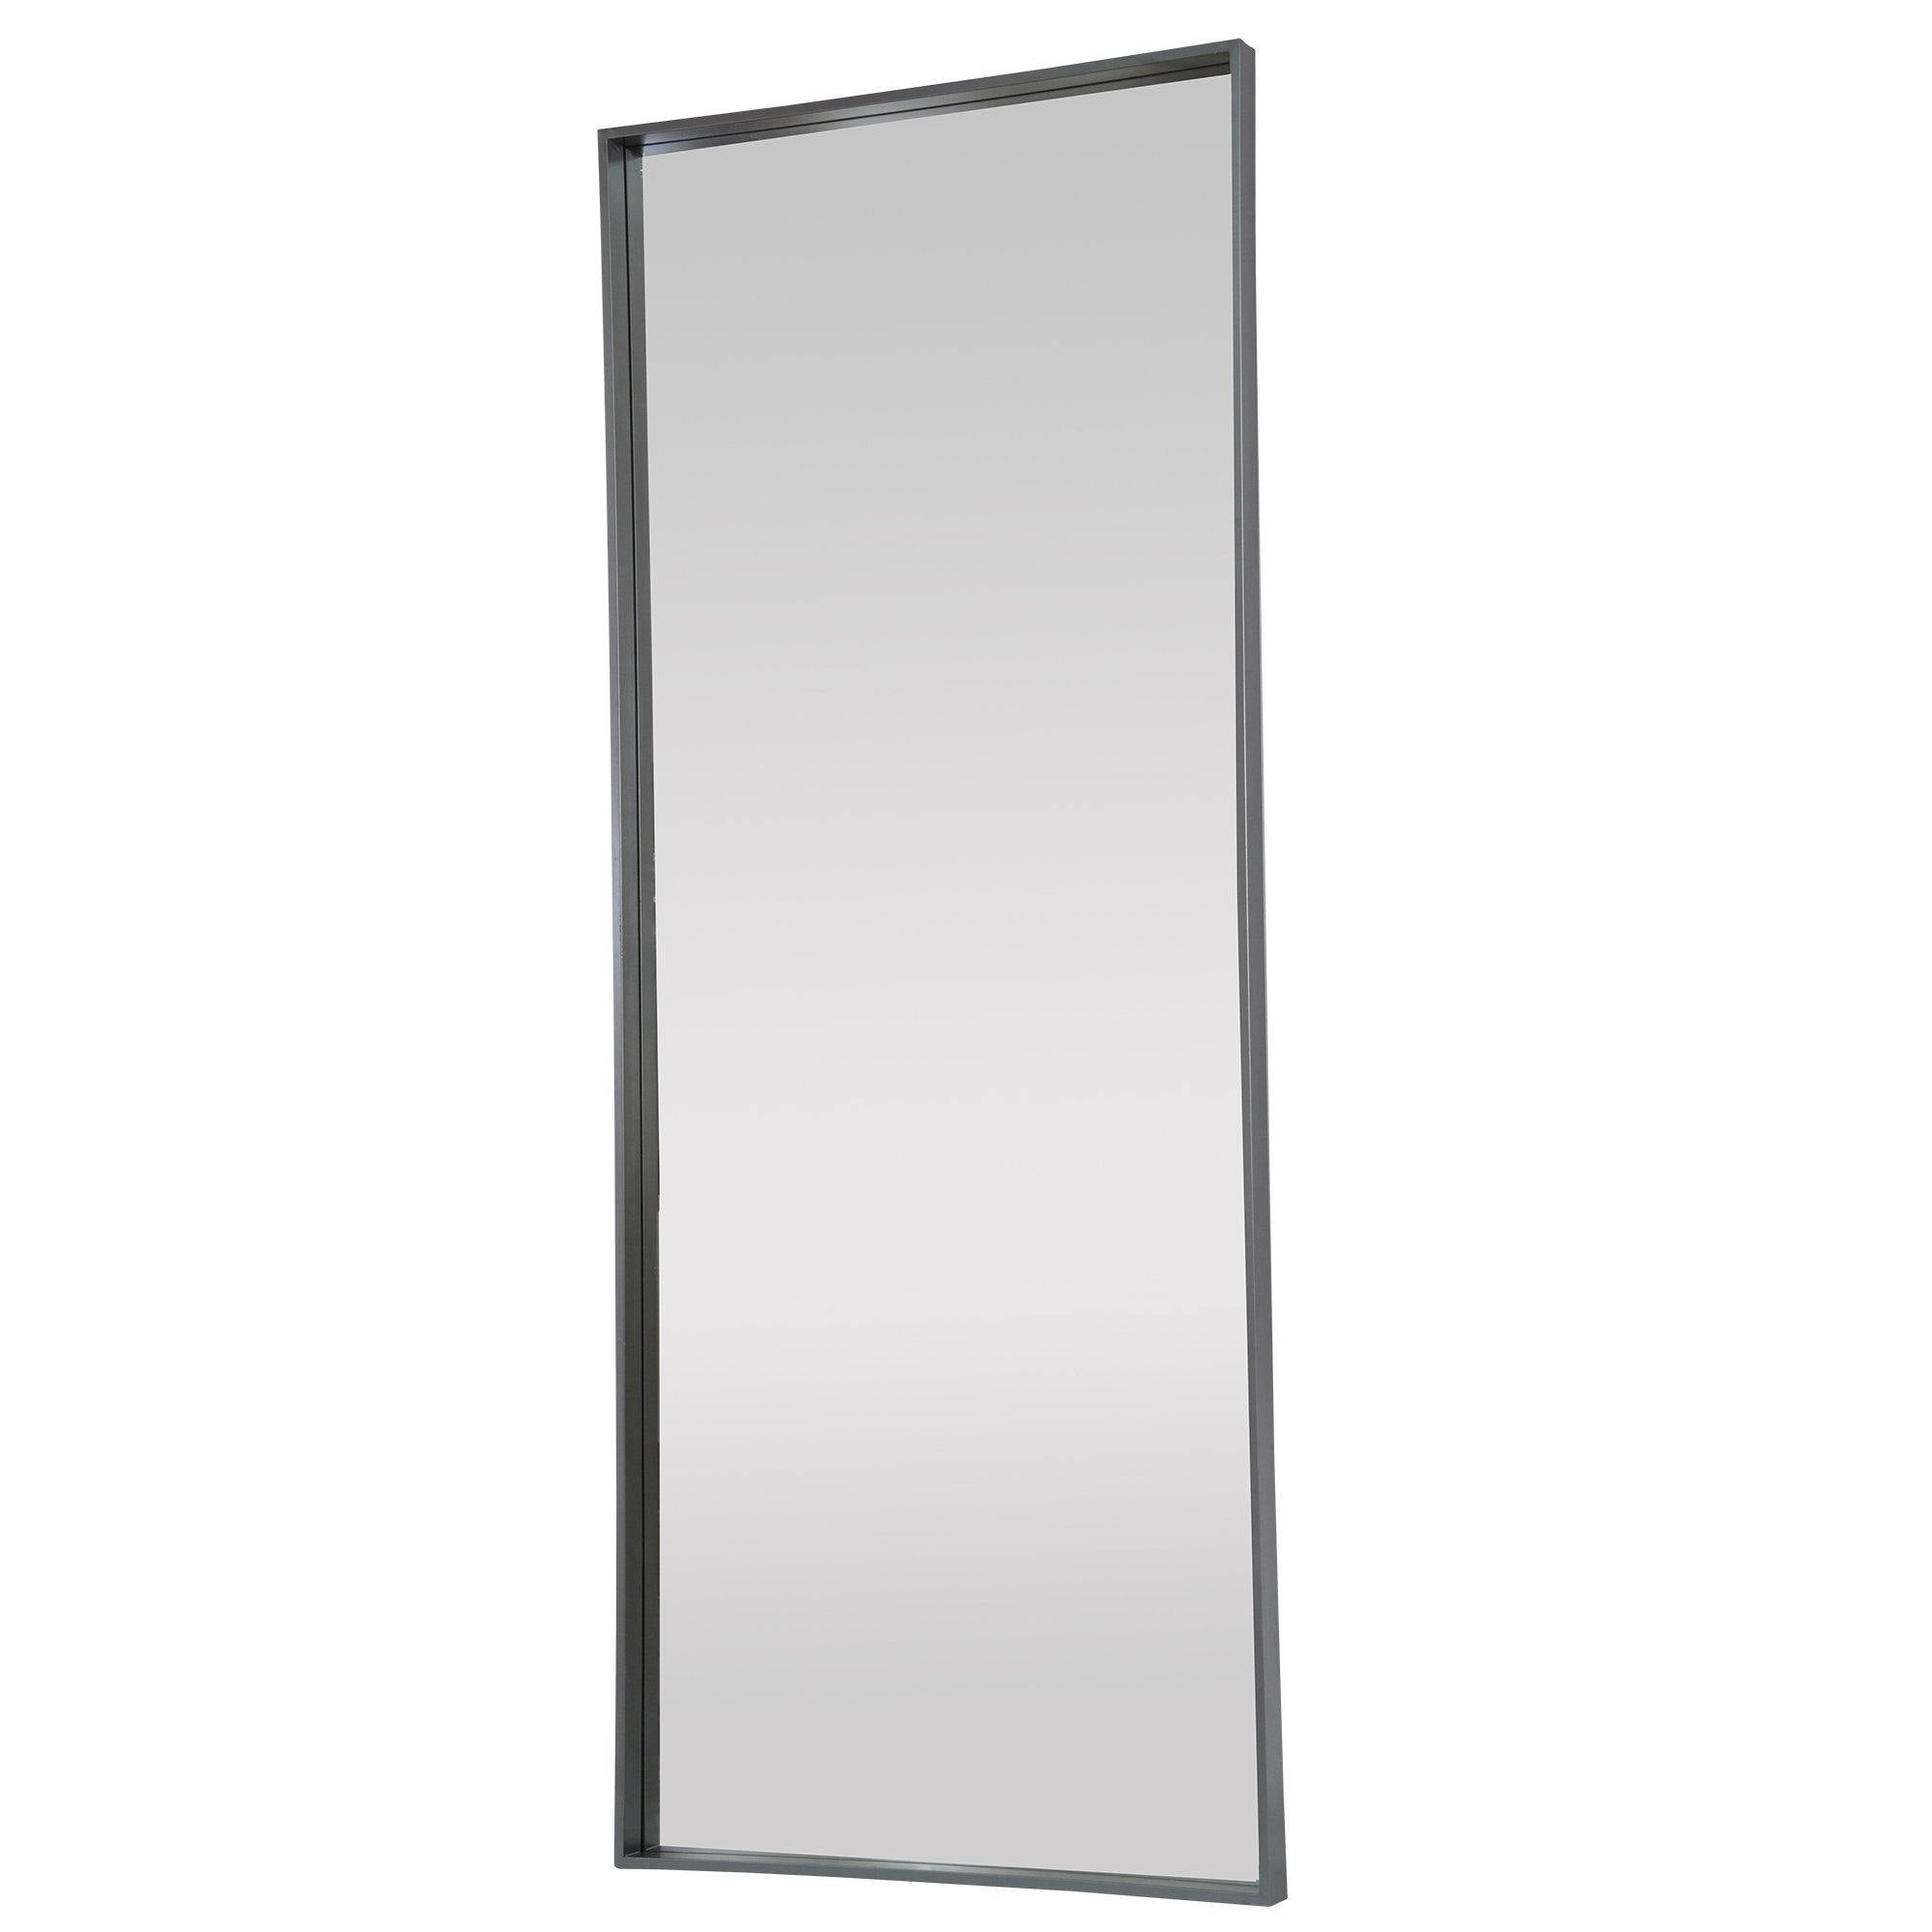 Arbour Wall Mirror - Reimagine Designs - 